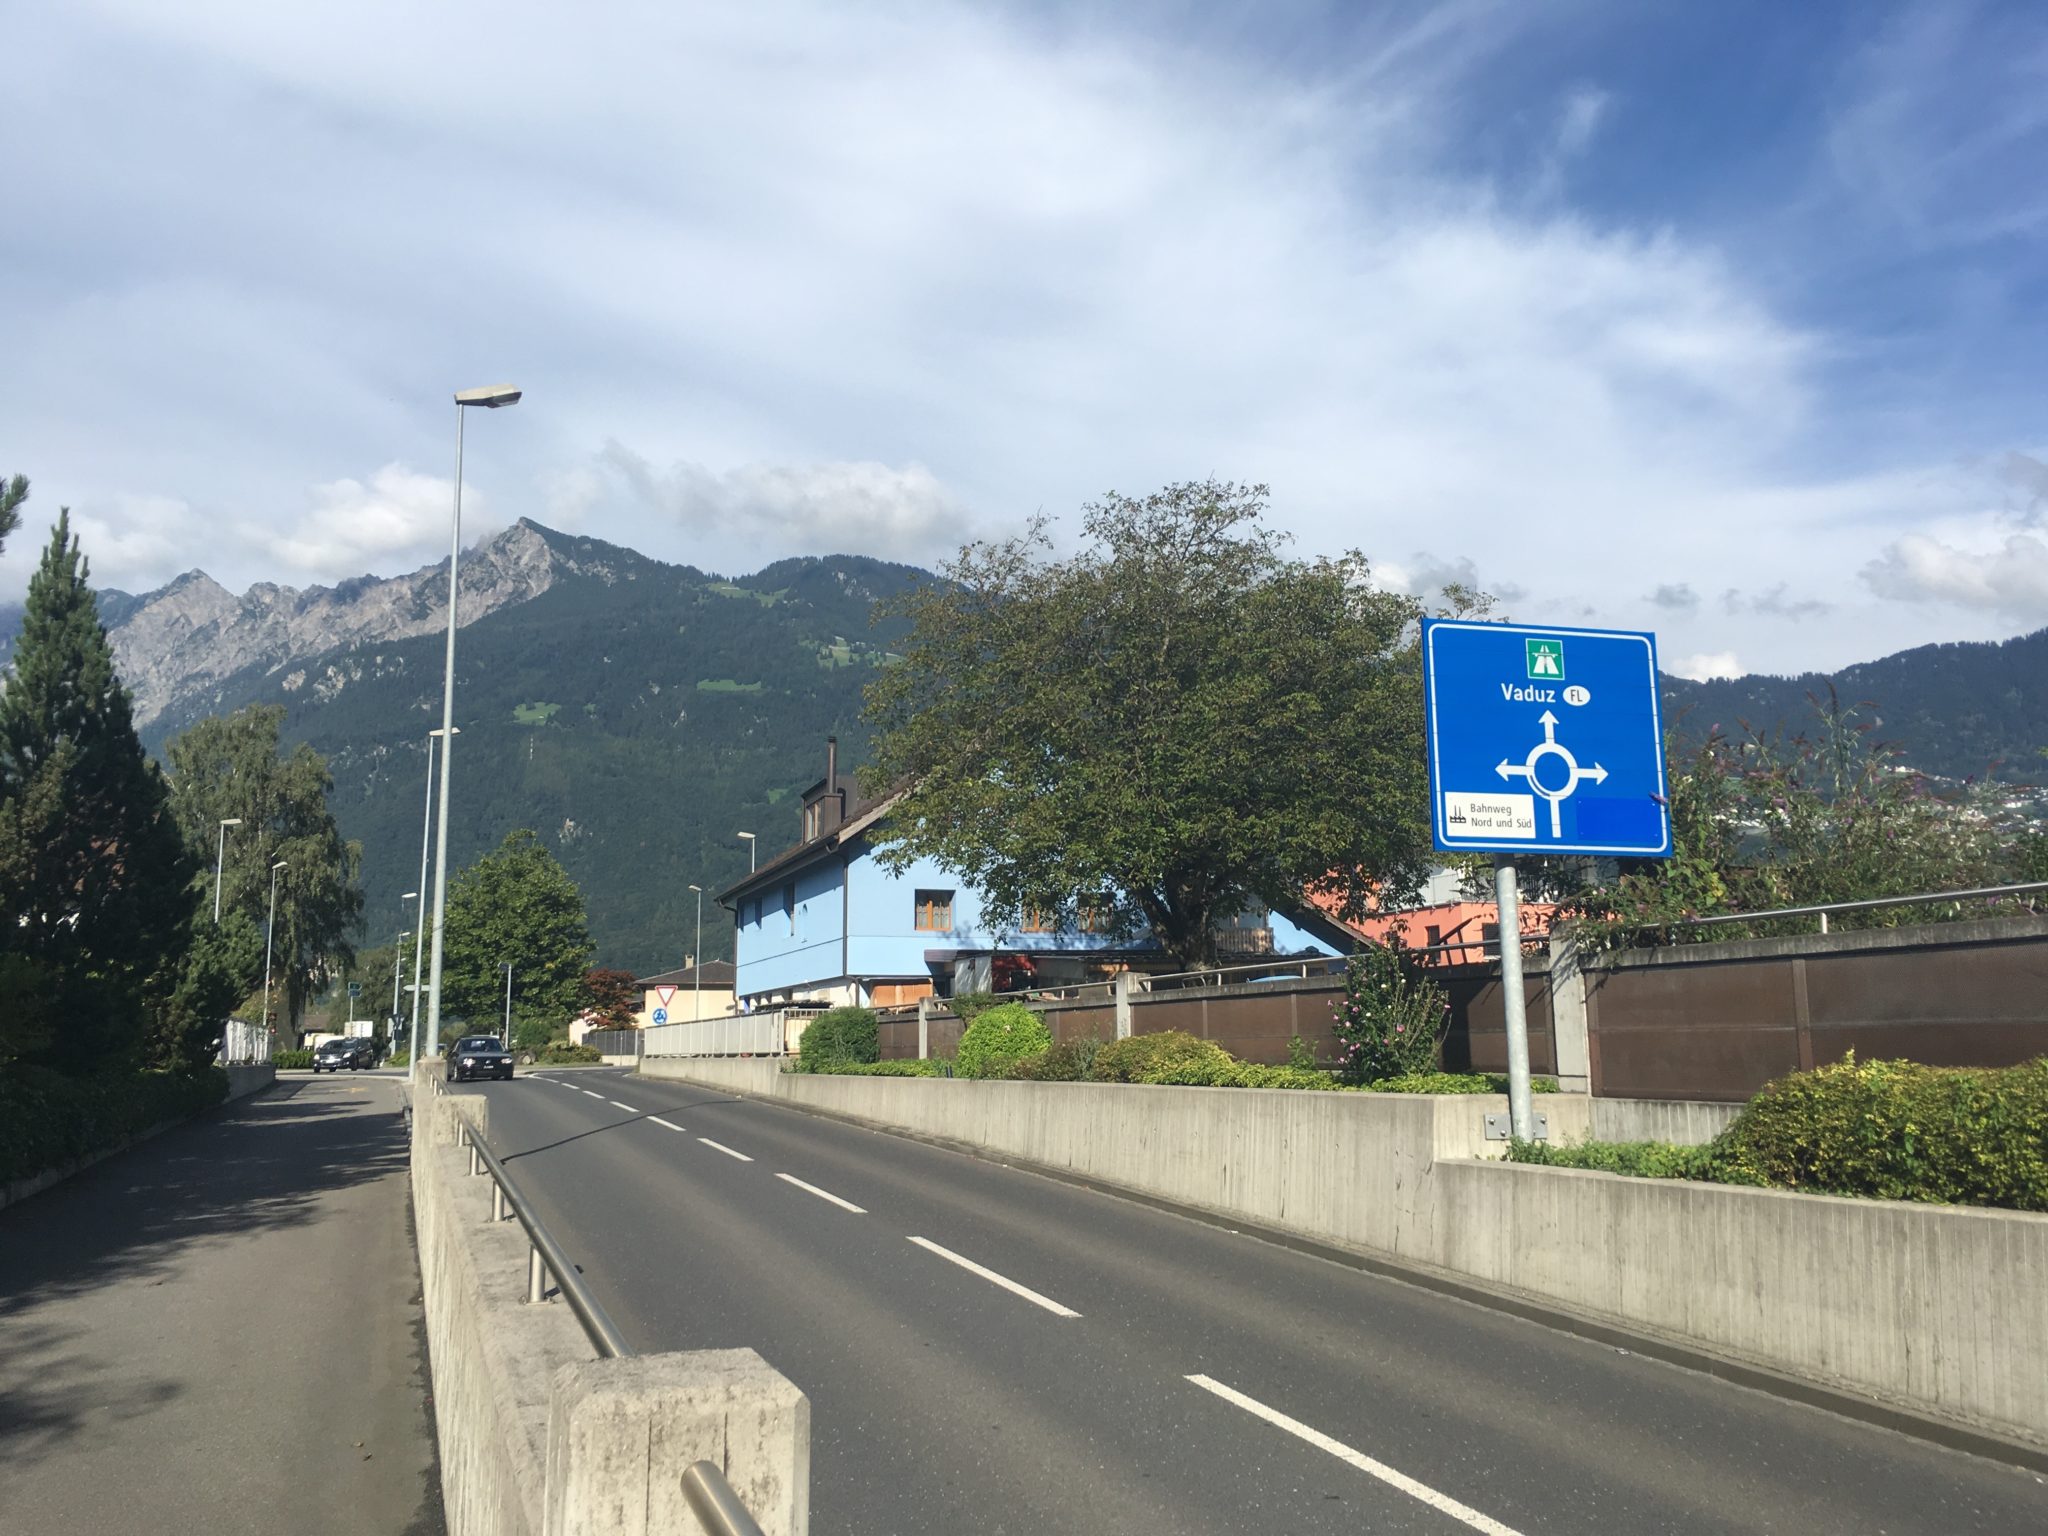 Sevelen is a small service town on the Swiss side of the Switzerland - Liechtenstein border